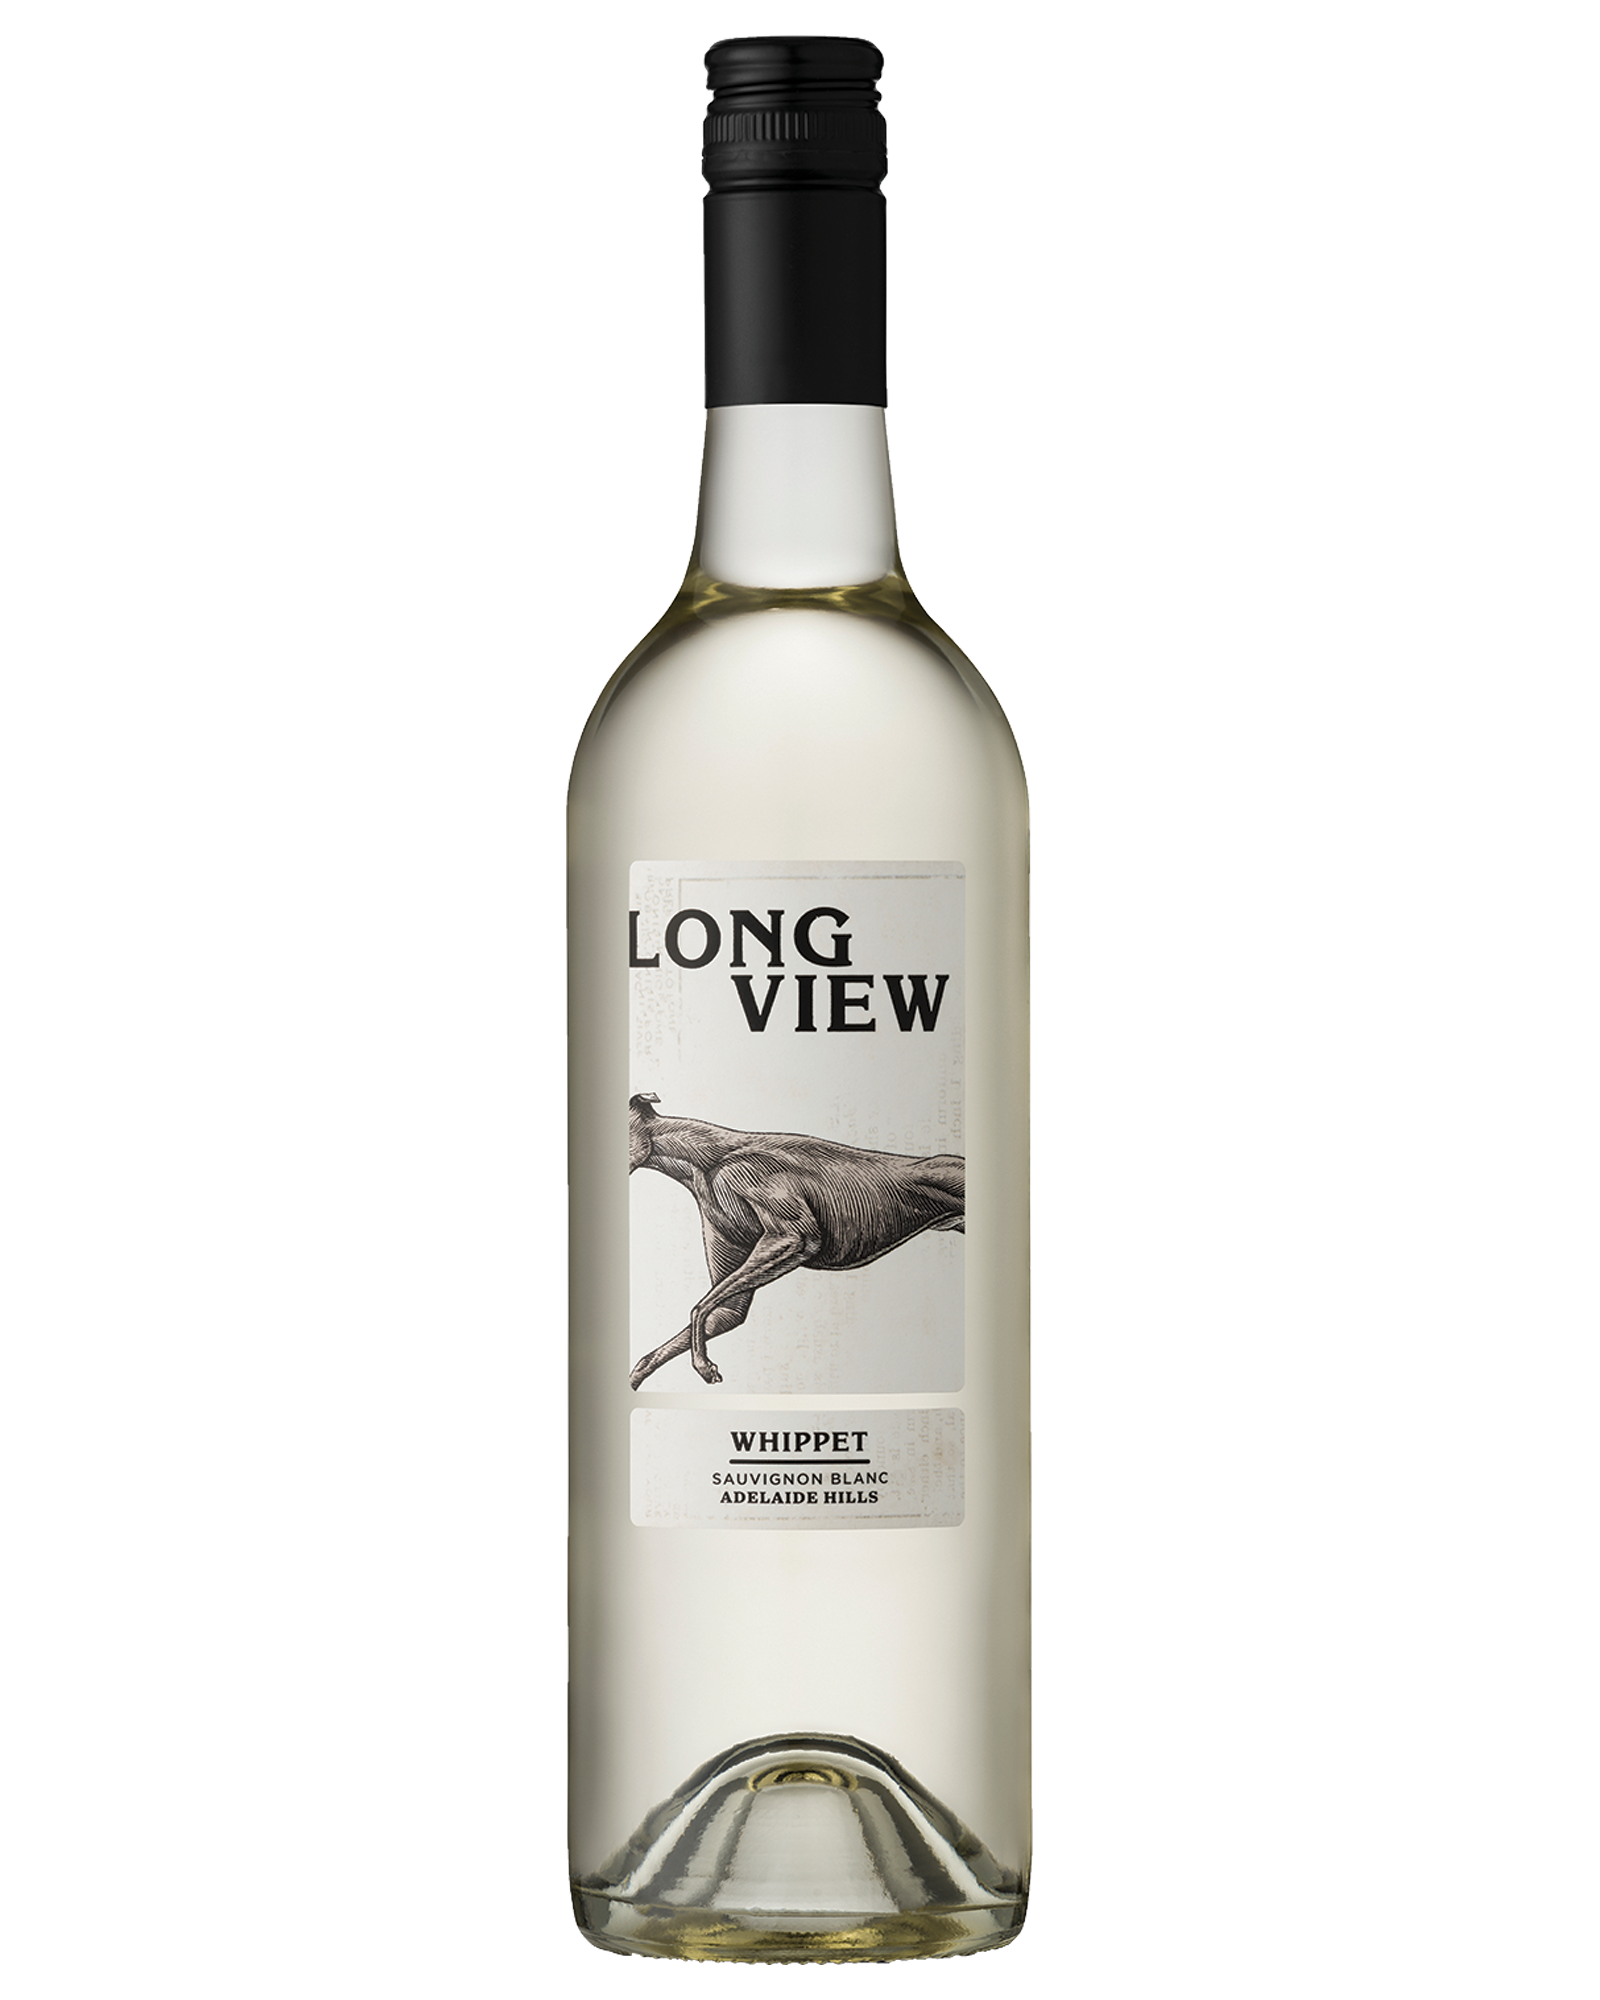 Longview Whippet Sauvignon Blanc